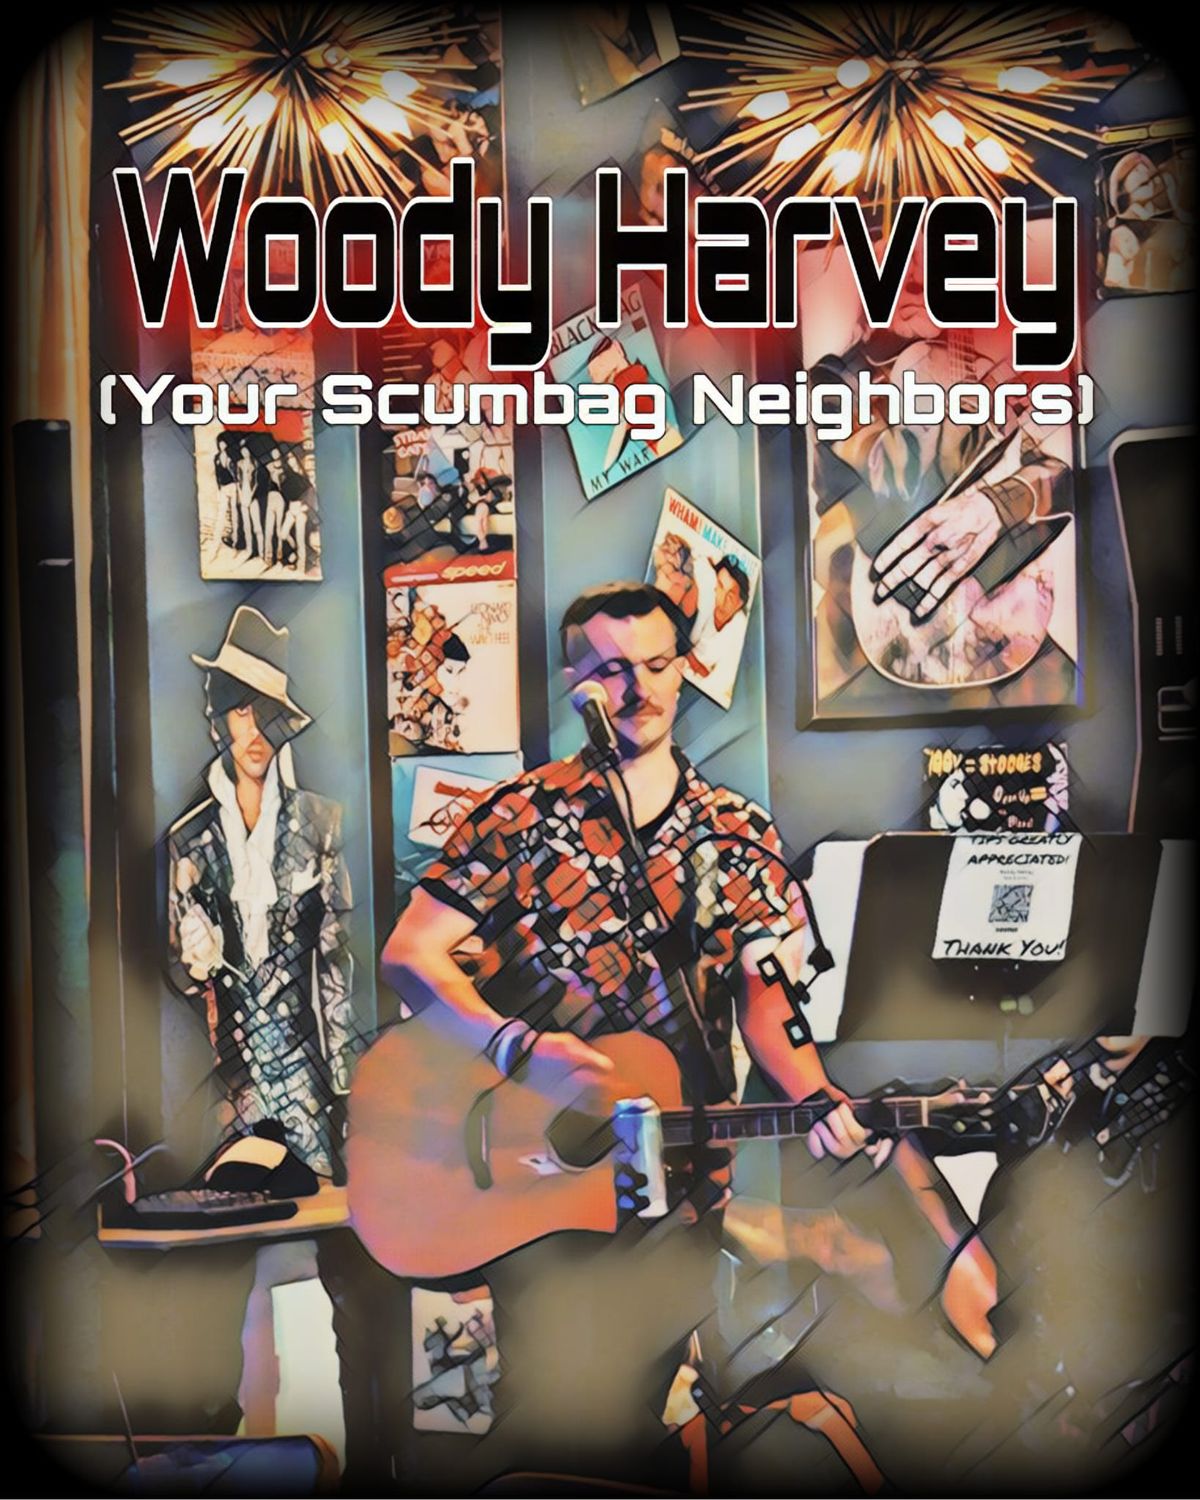 Woody Harvey @ Barrel Proof - Bannerman